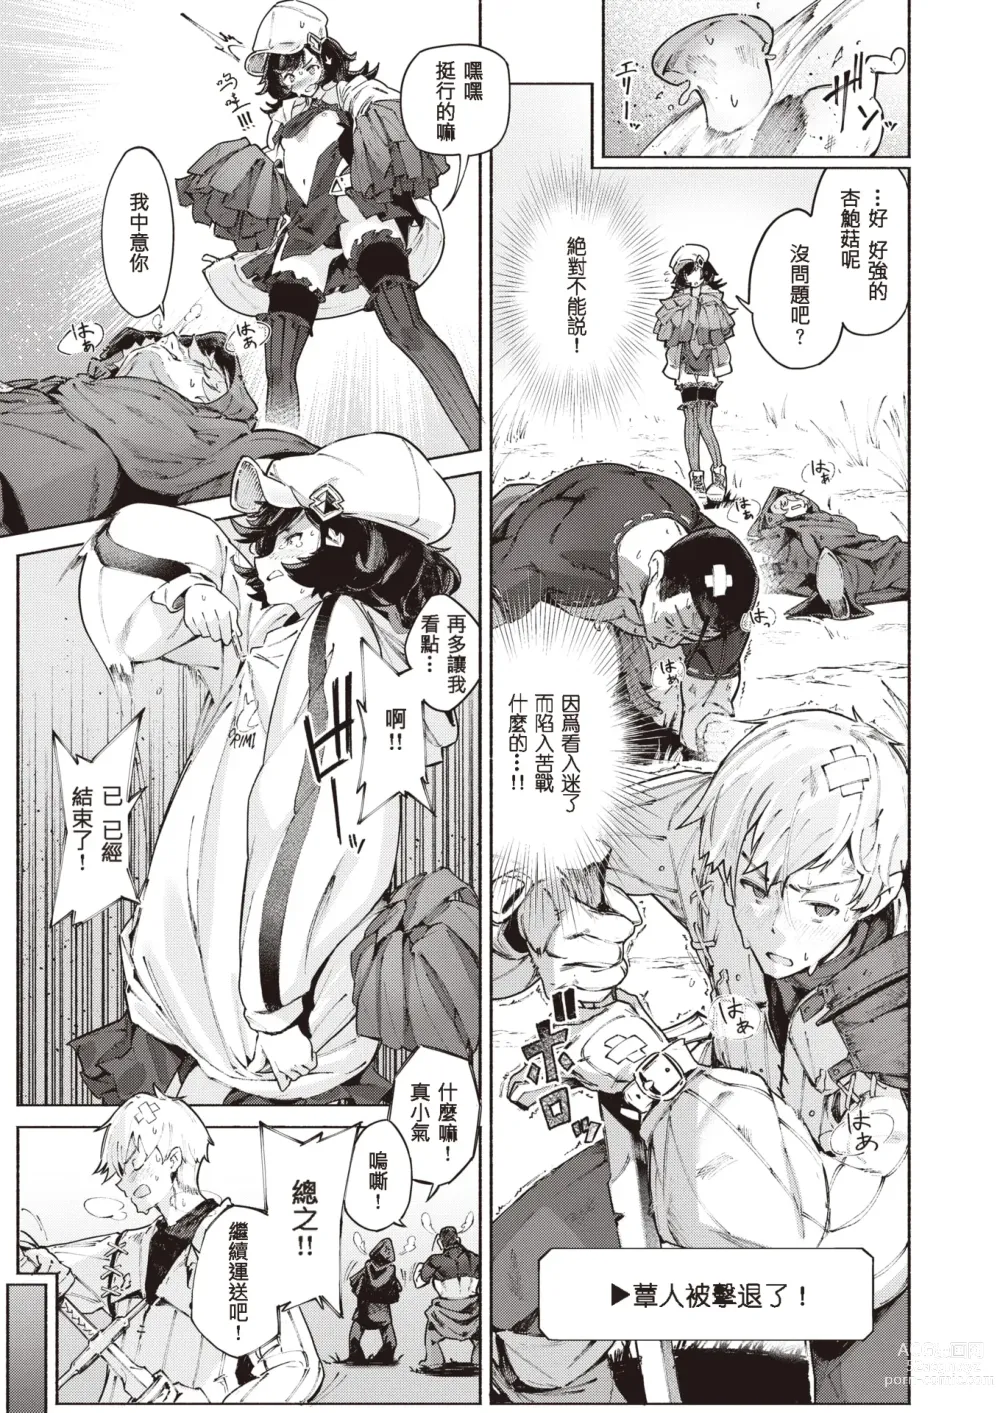 Page 9 of manga Boukensha-tachi no Nagai Tabiji